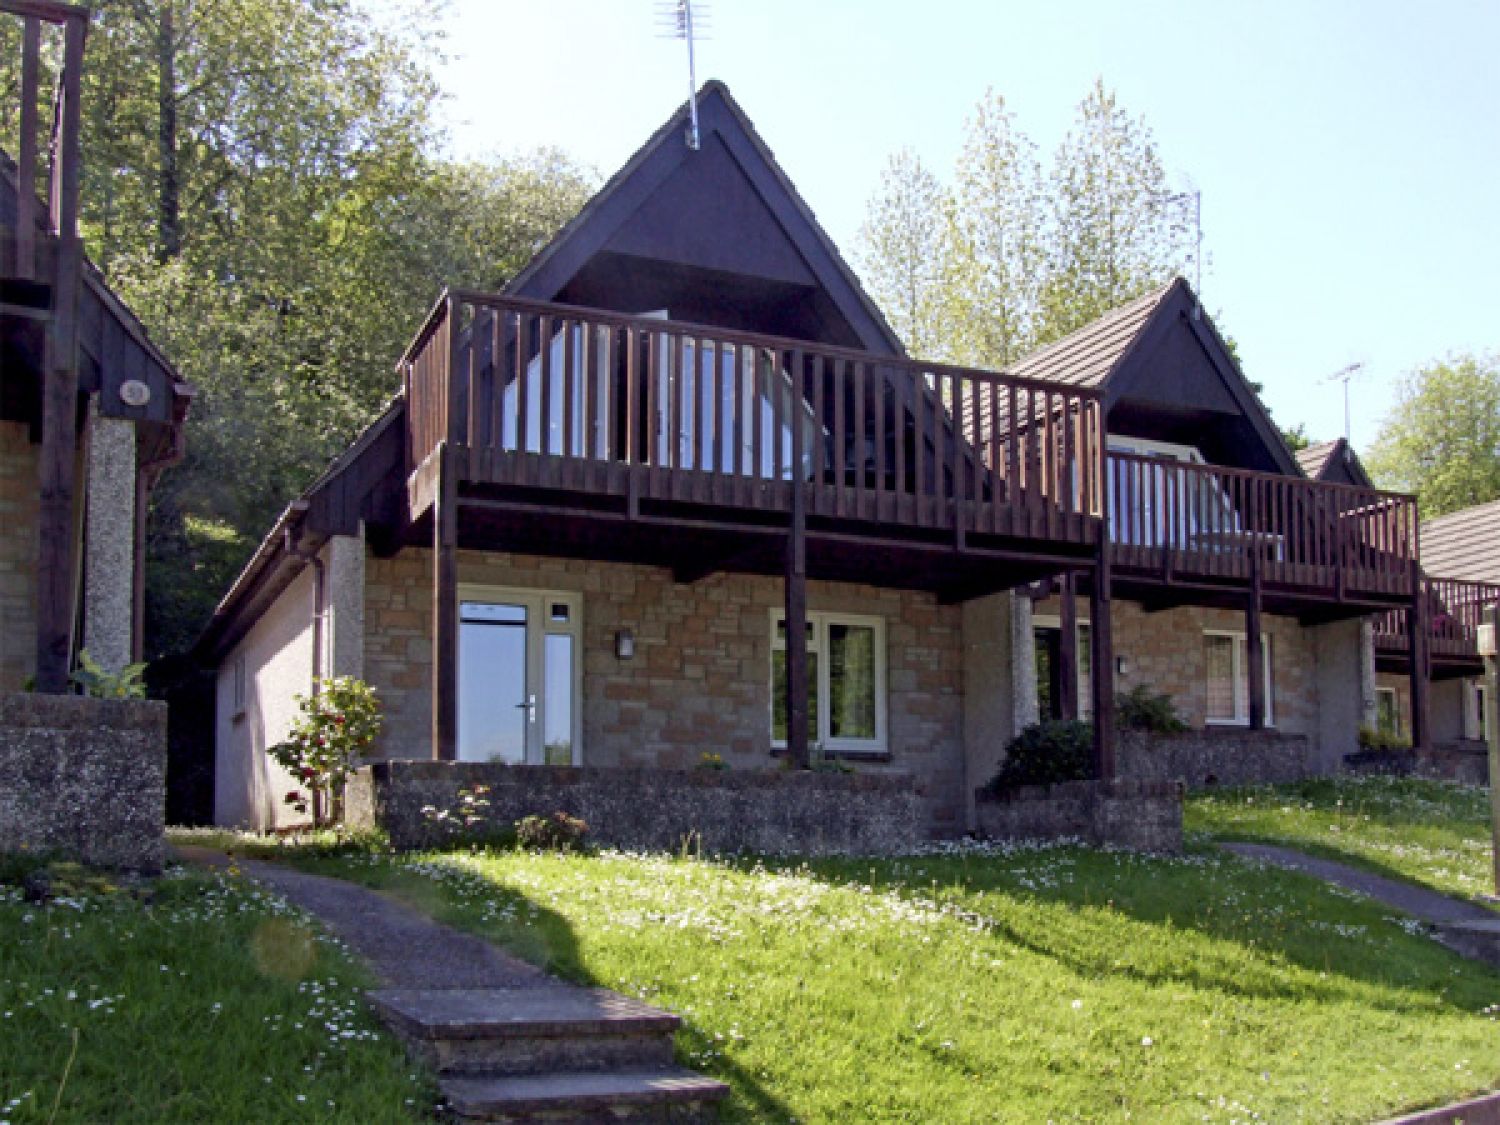 No 50 Valley Lodge - Holiday Park in Tavistock, Cornwall, England